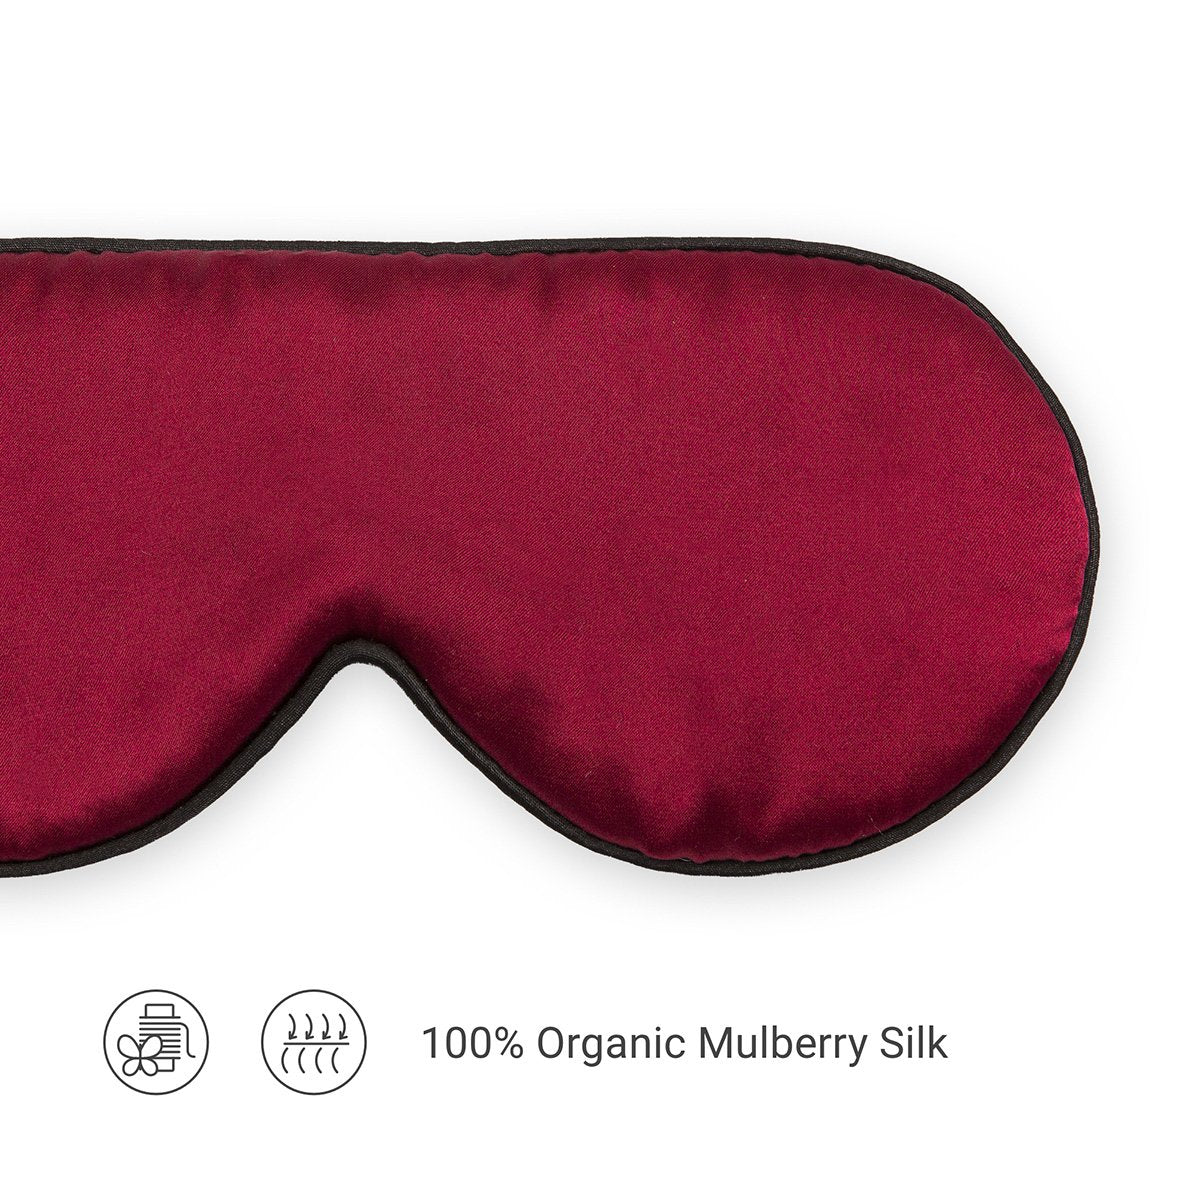 A red silk sleep eye mask made from organic mulberry silk